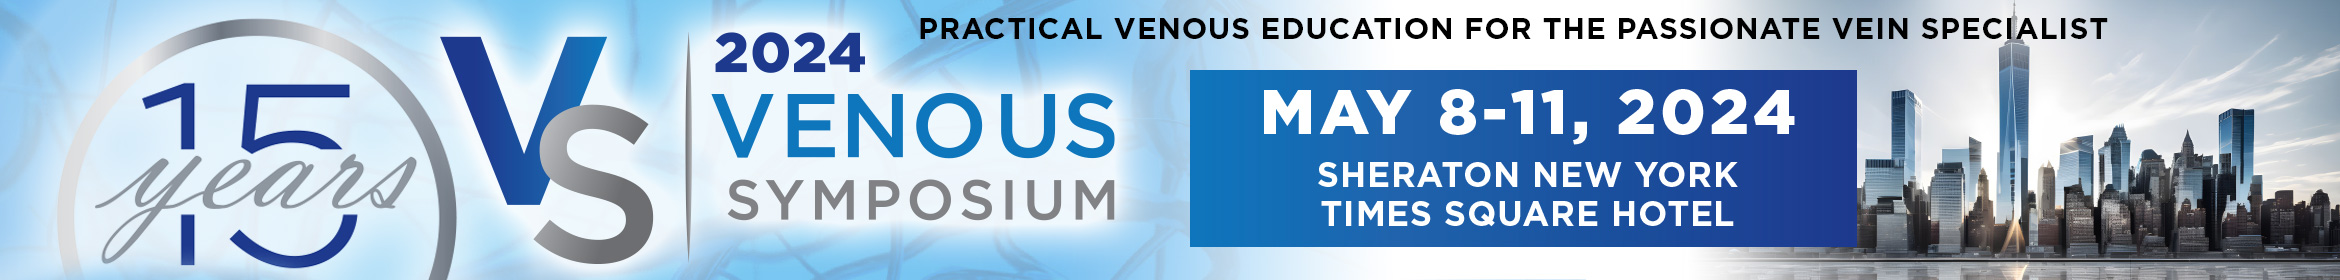 Venous Symposium 2024 Main banner